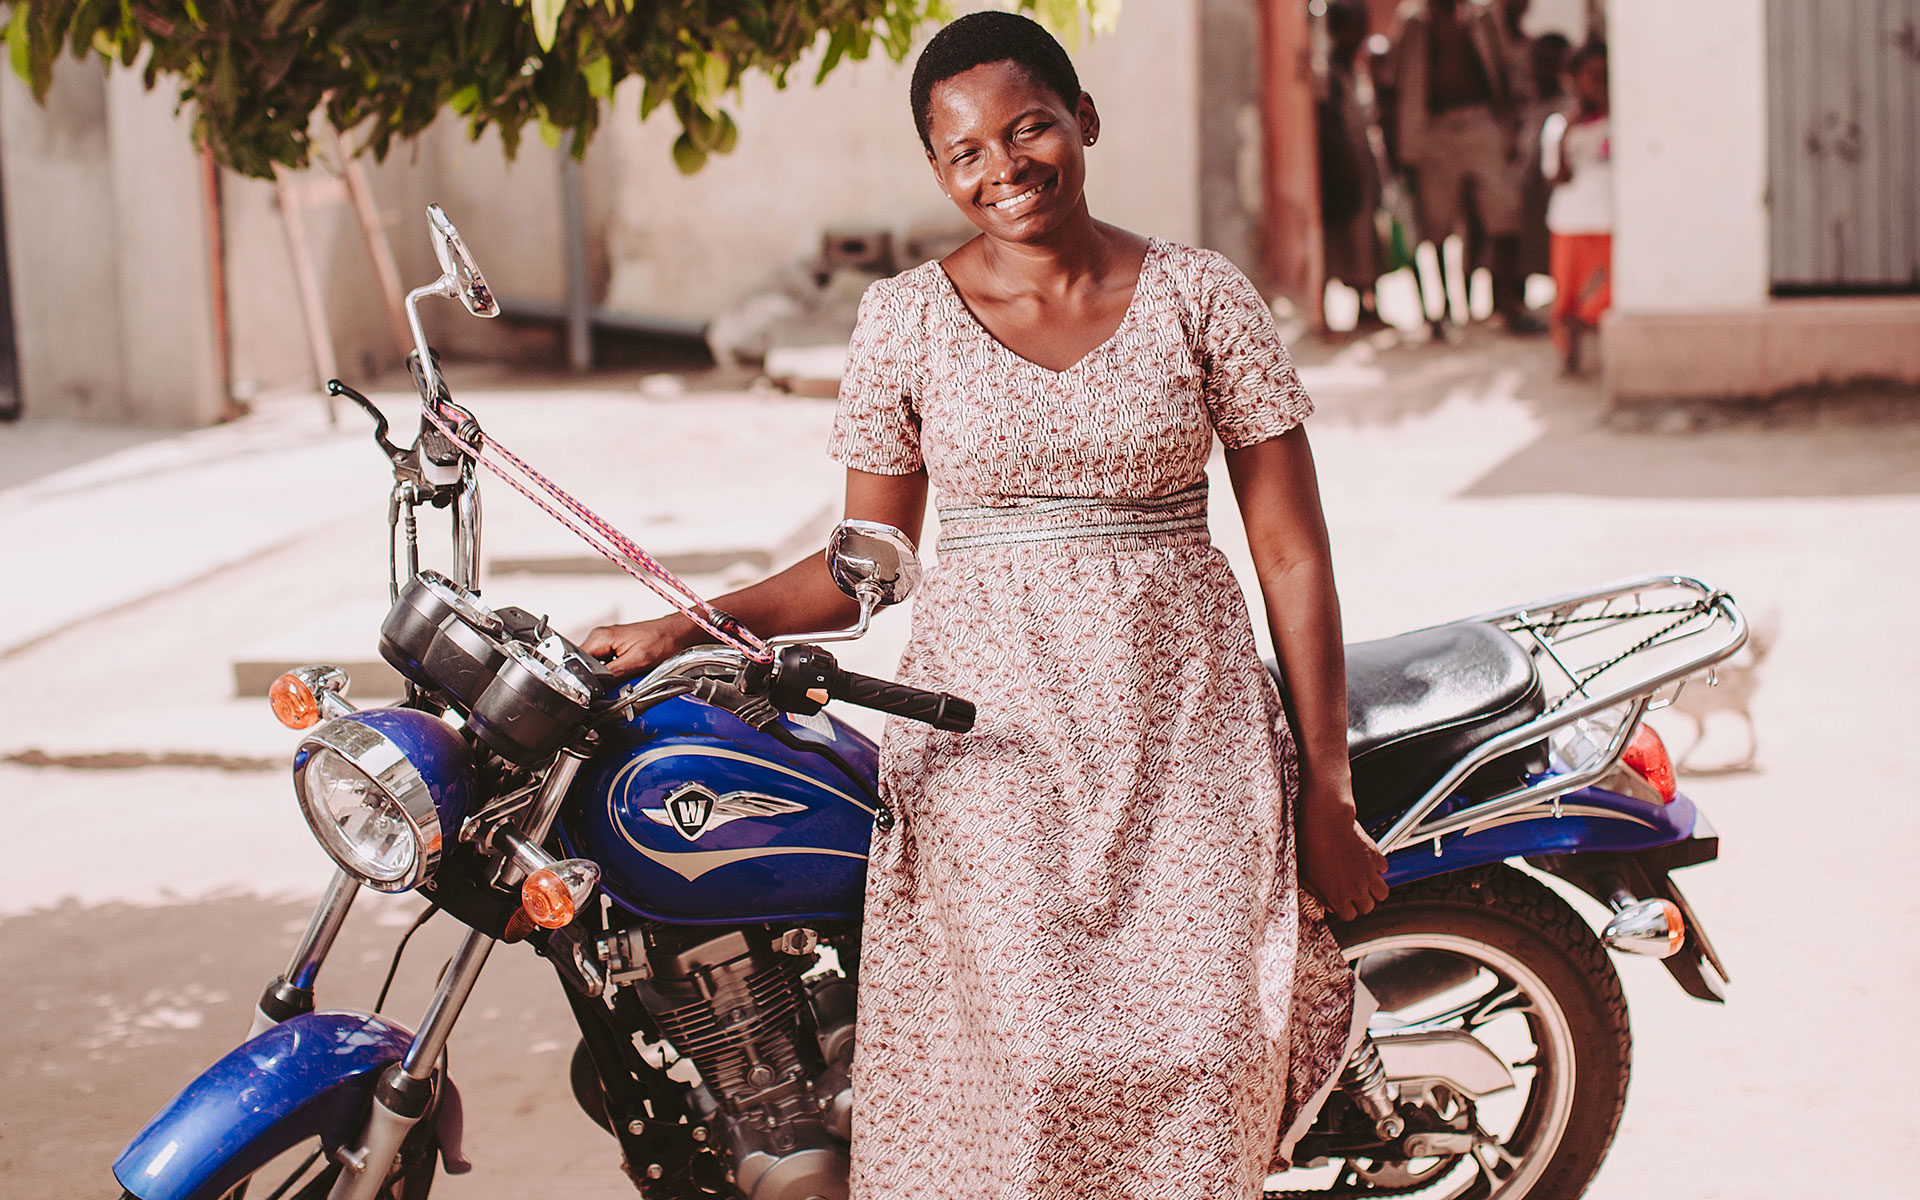 Komina stands in front of her motorbike